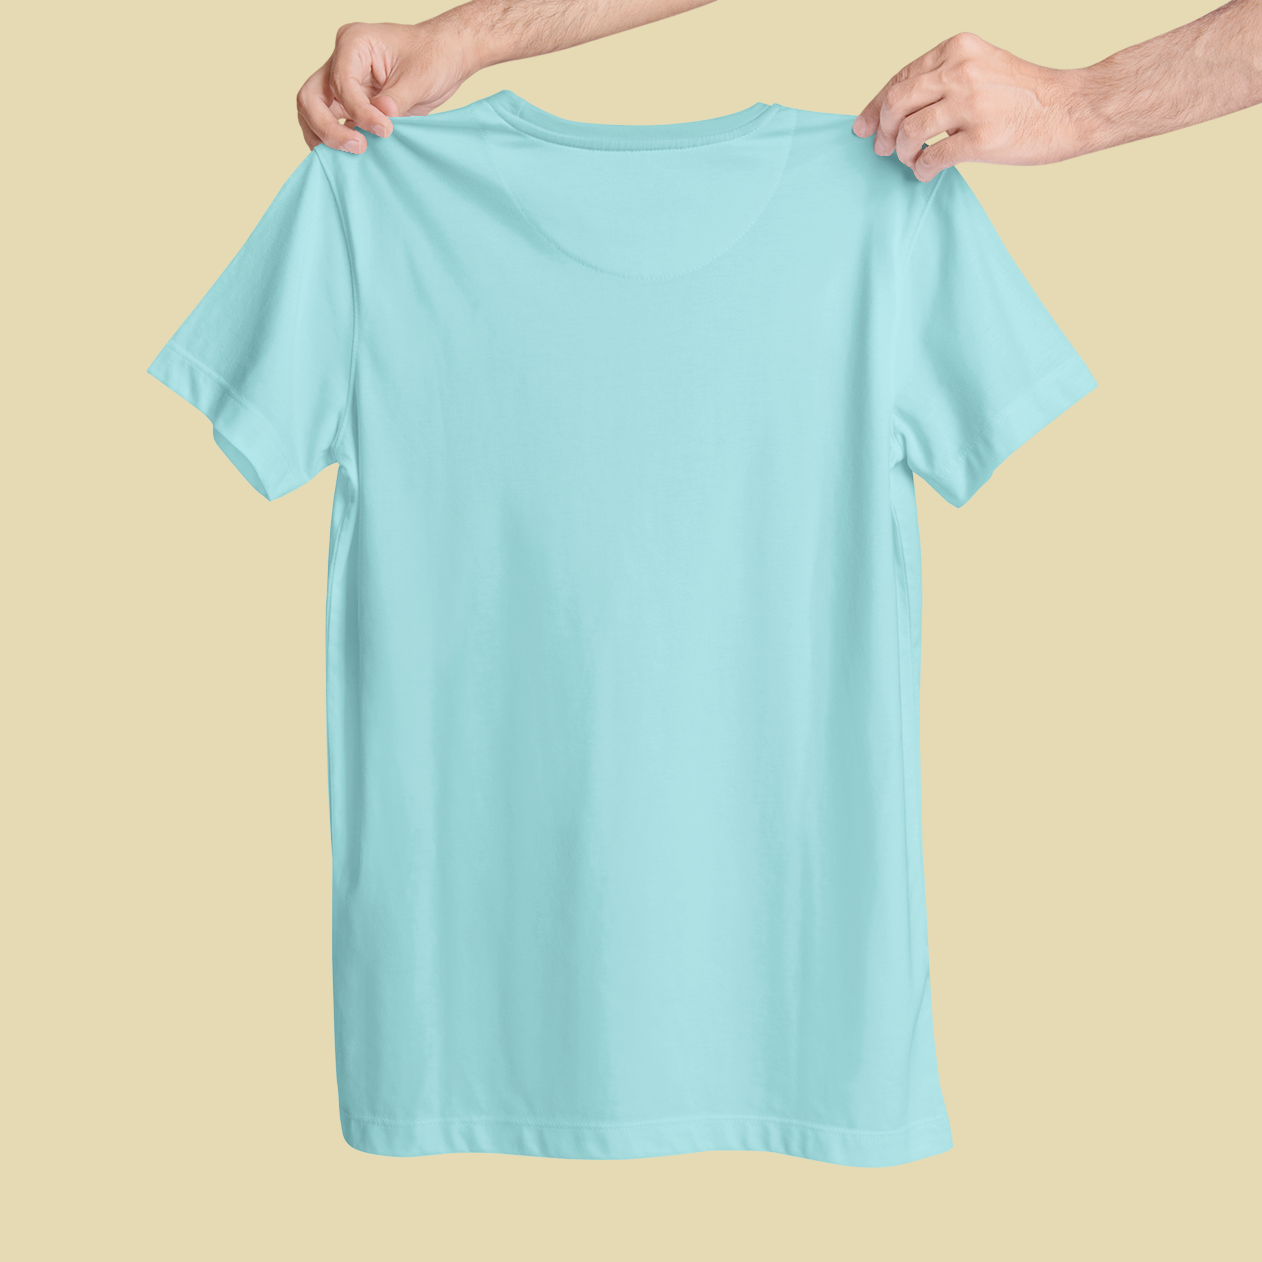 Break The Limit Round Neck Printed T-Shirt - Blue